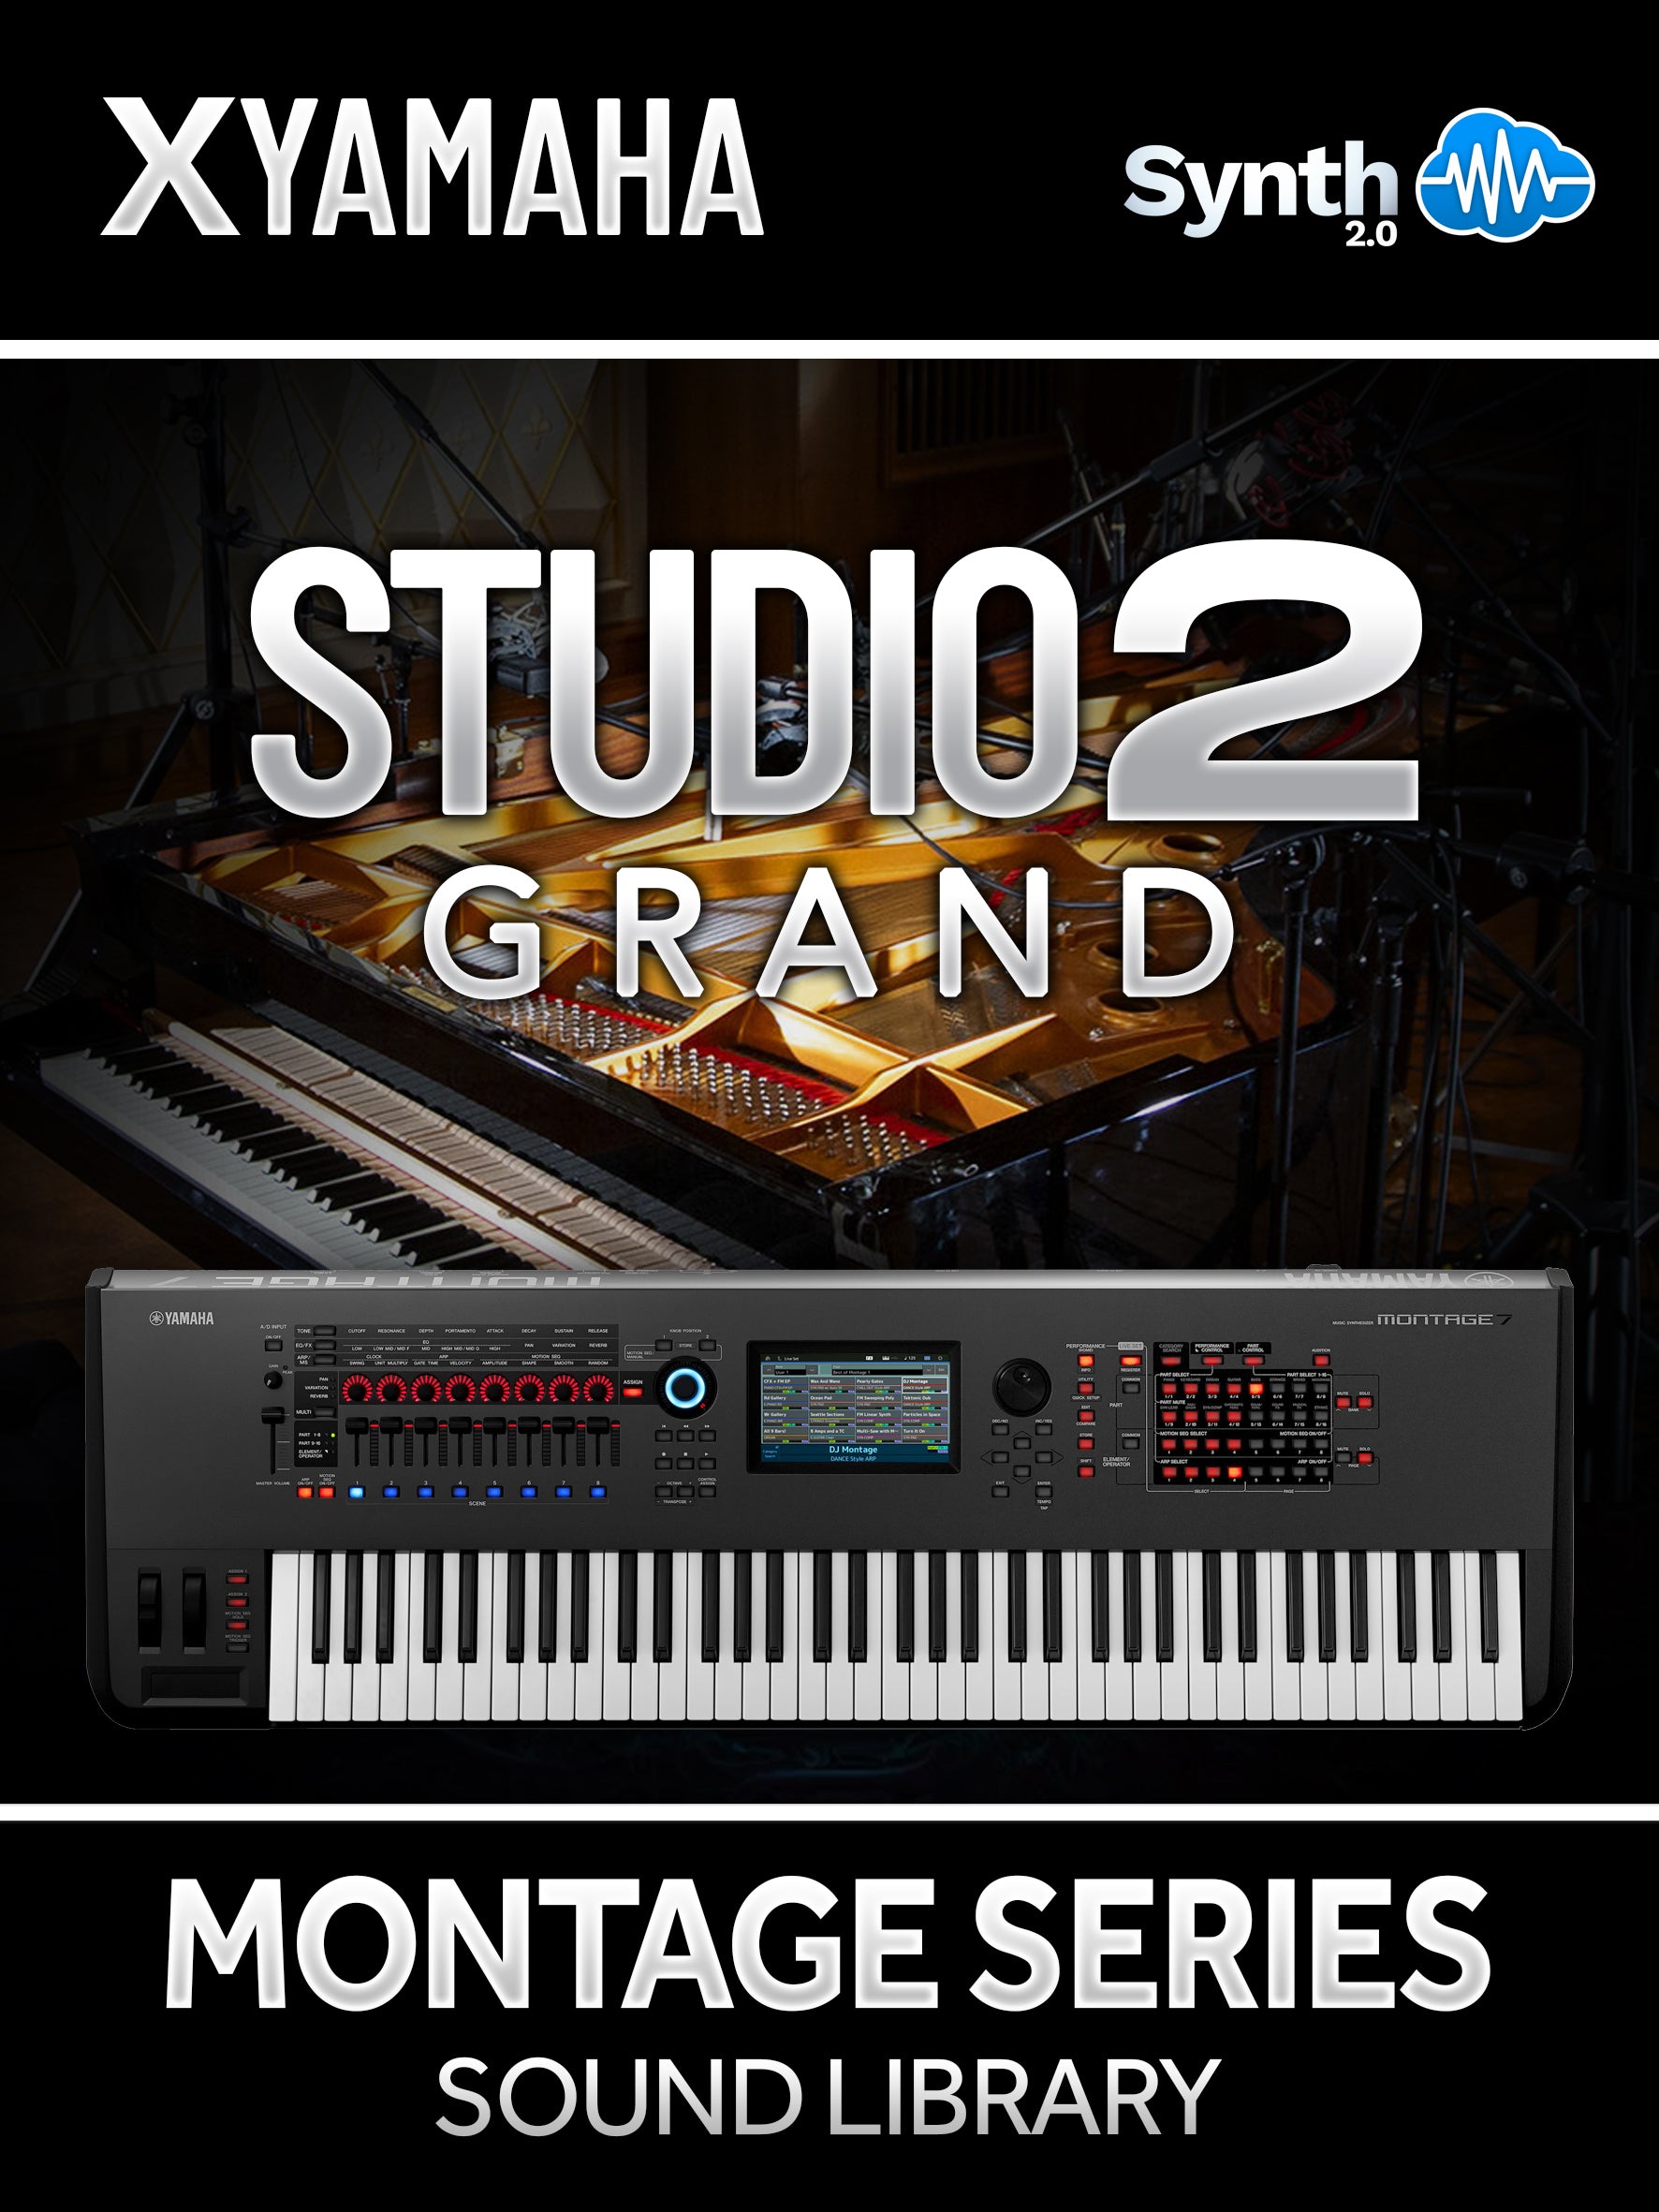 ITB015 - Studio2 Grand - Yamaha MONTAGE / M ( 9 presets )